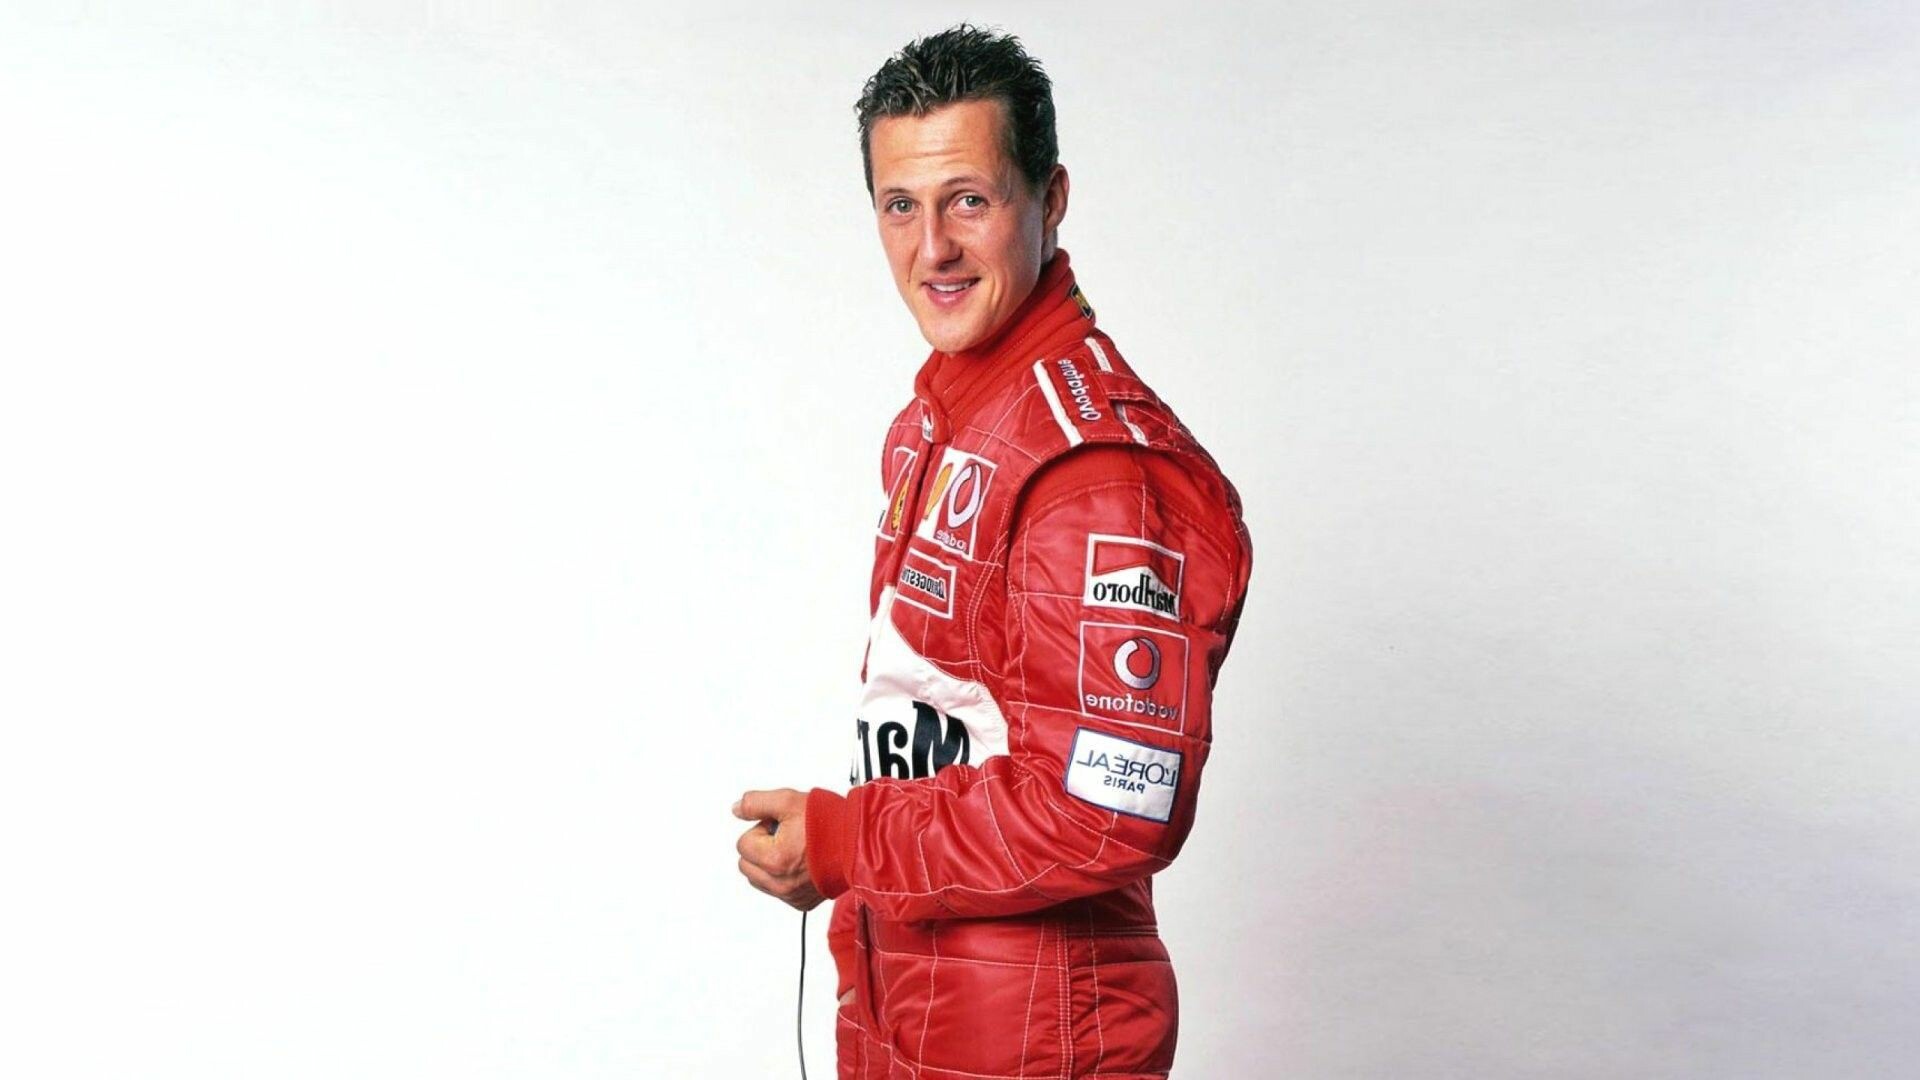 Michael Schumacher: He won his first Drivers' Championship in 1994 driving the Benetton B194. 1920x1080 Full HD Wallpaper.